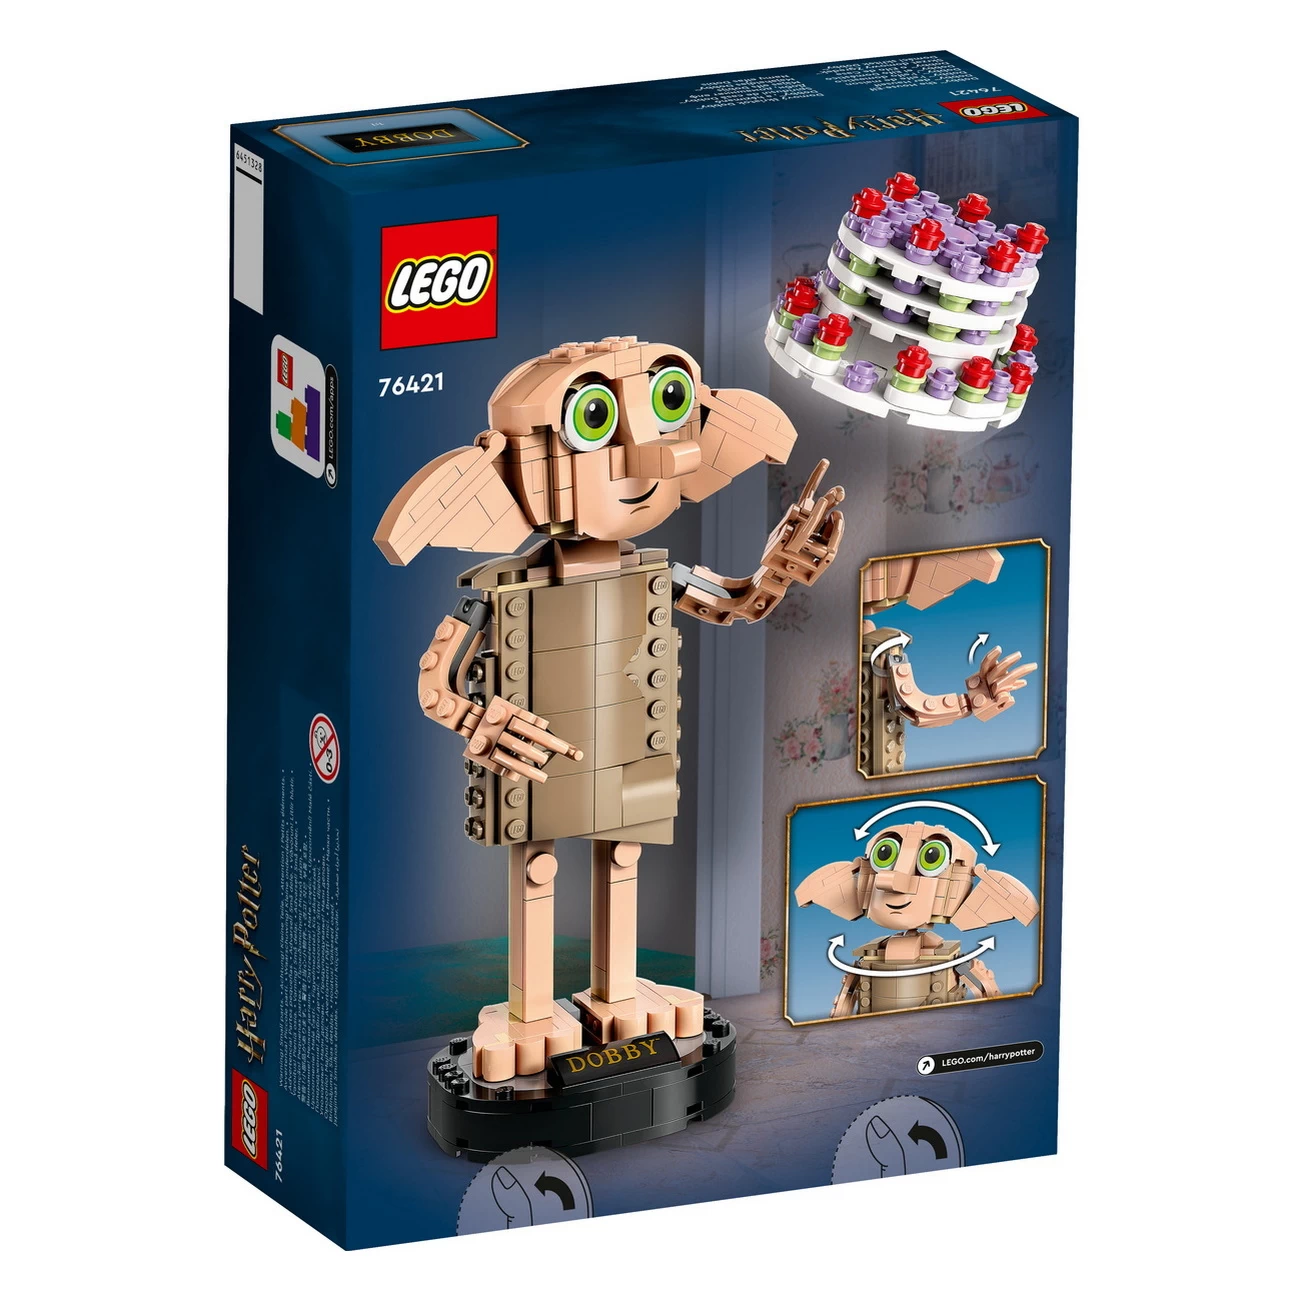 LEGO Harry Potter 76421 - Dobby der Hauself